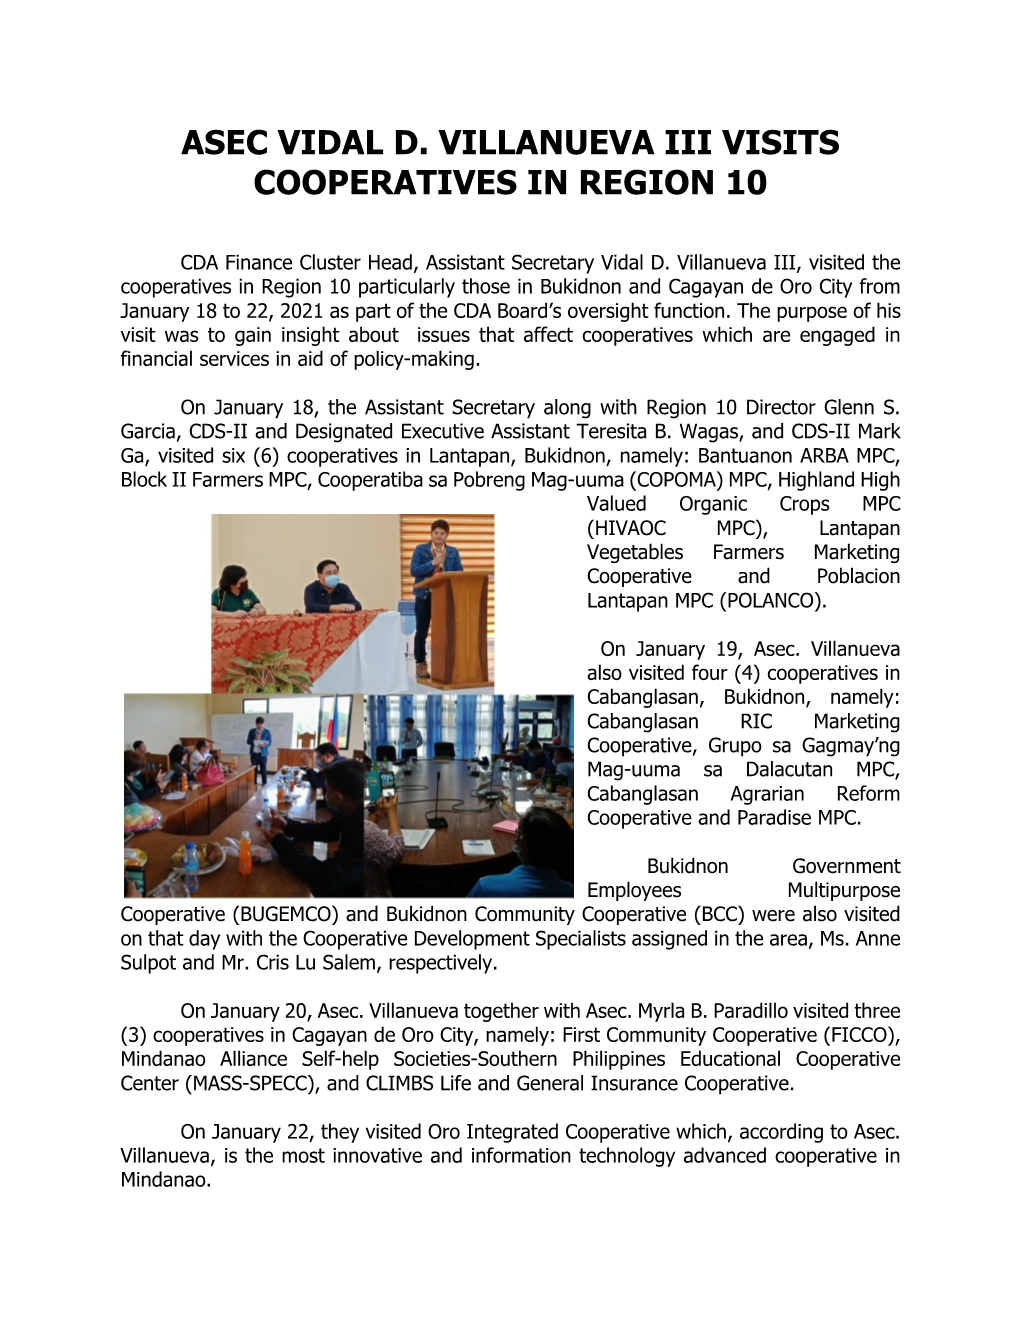 Asec Vidal D. Villanueva Iii Visits Cooperatives in Region 10